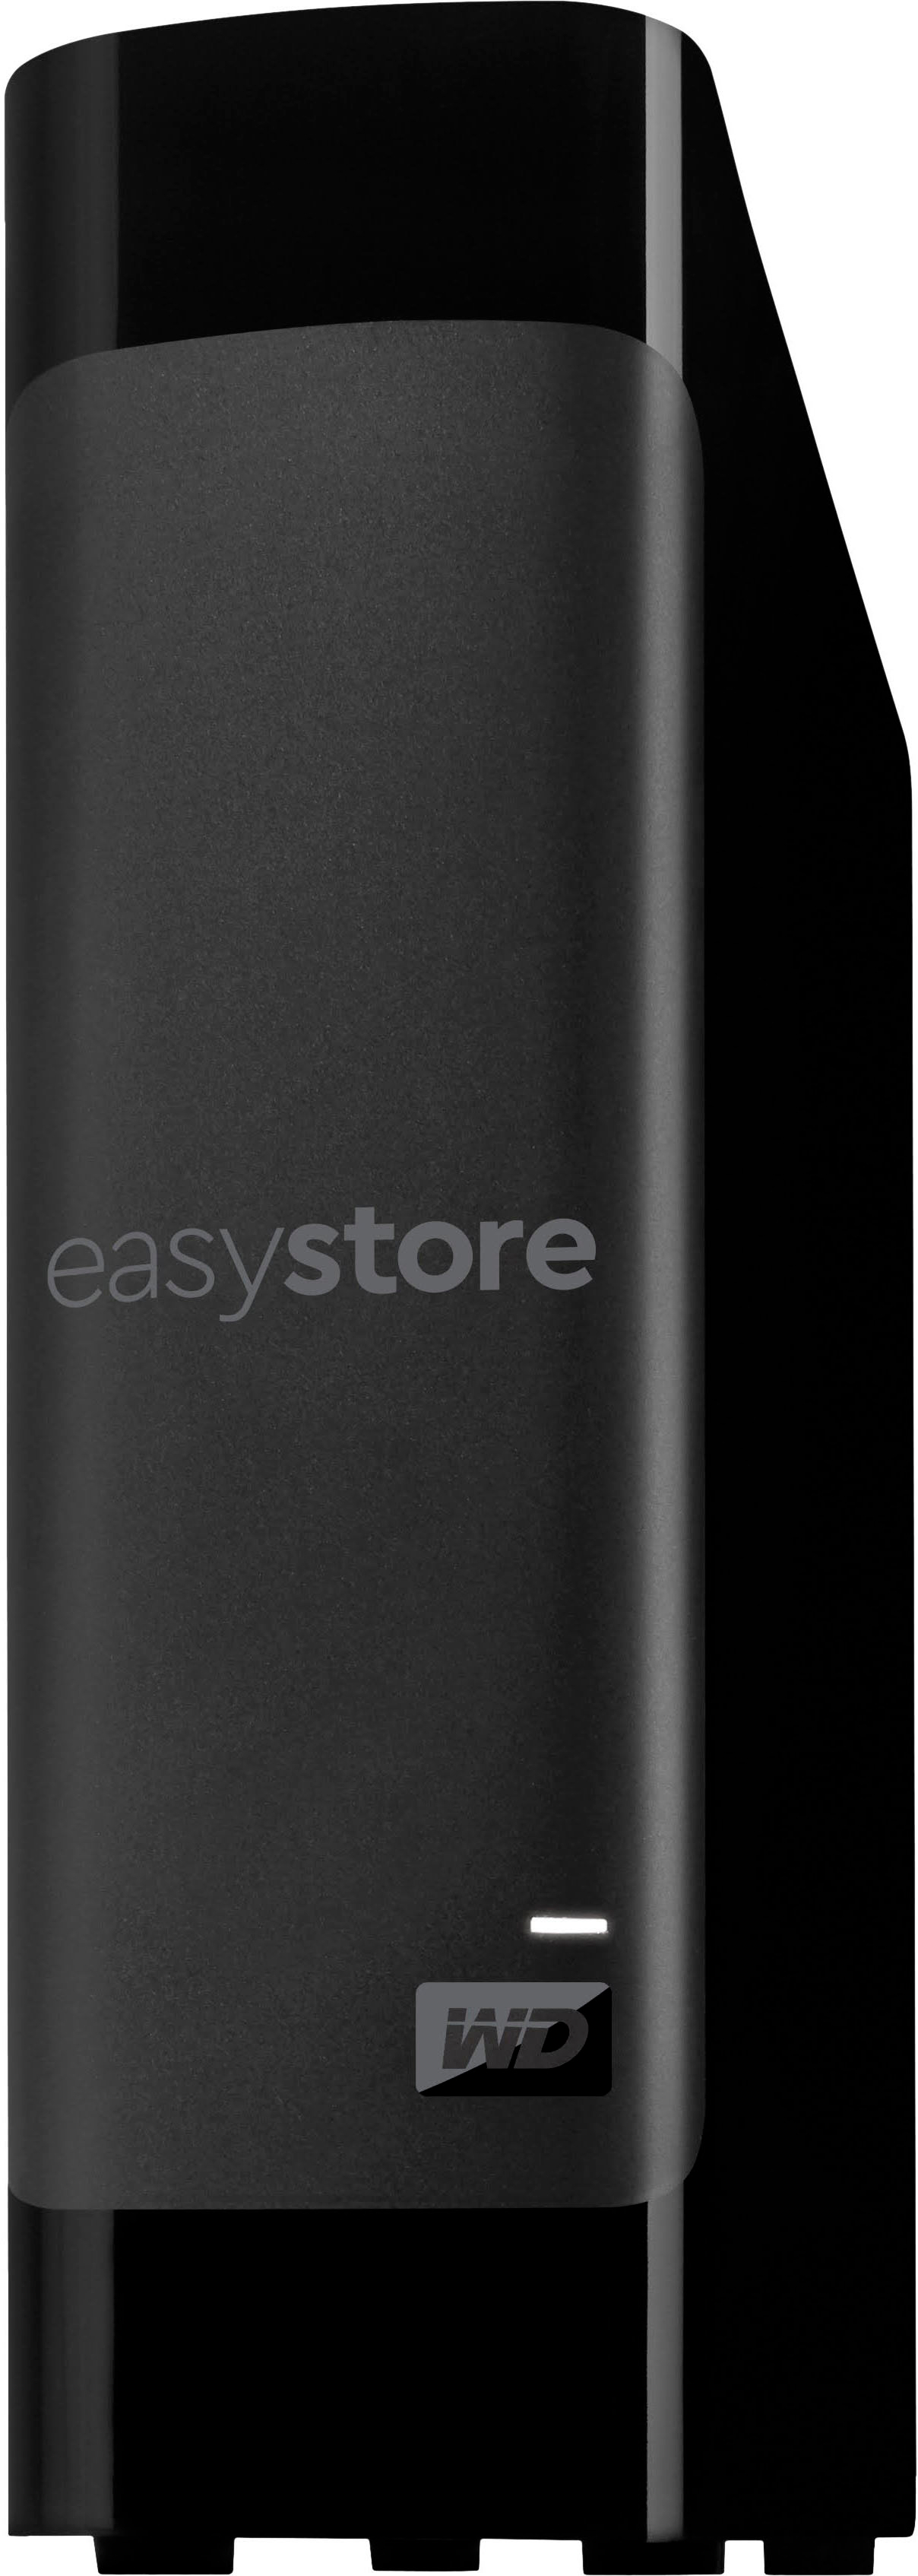 WD easystore 20TB External USB 3.0 Hard Drive Black WDBAMA0200HBK-NESN -  Best Buy